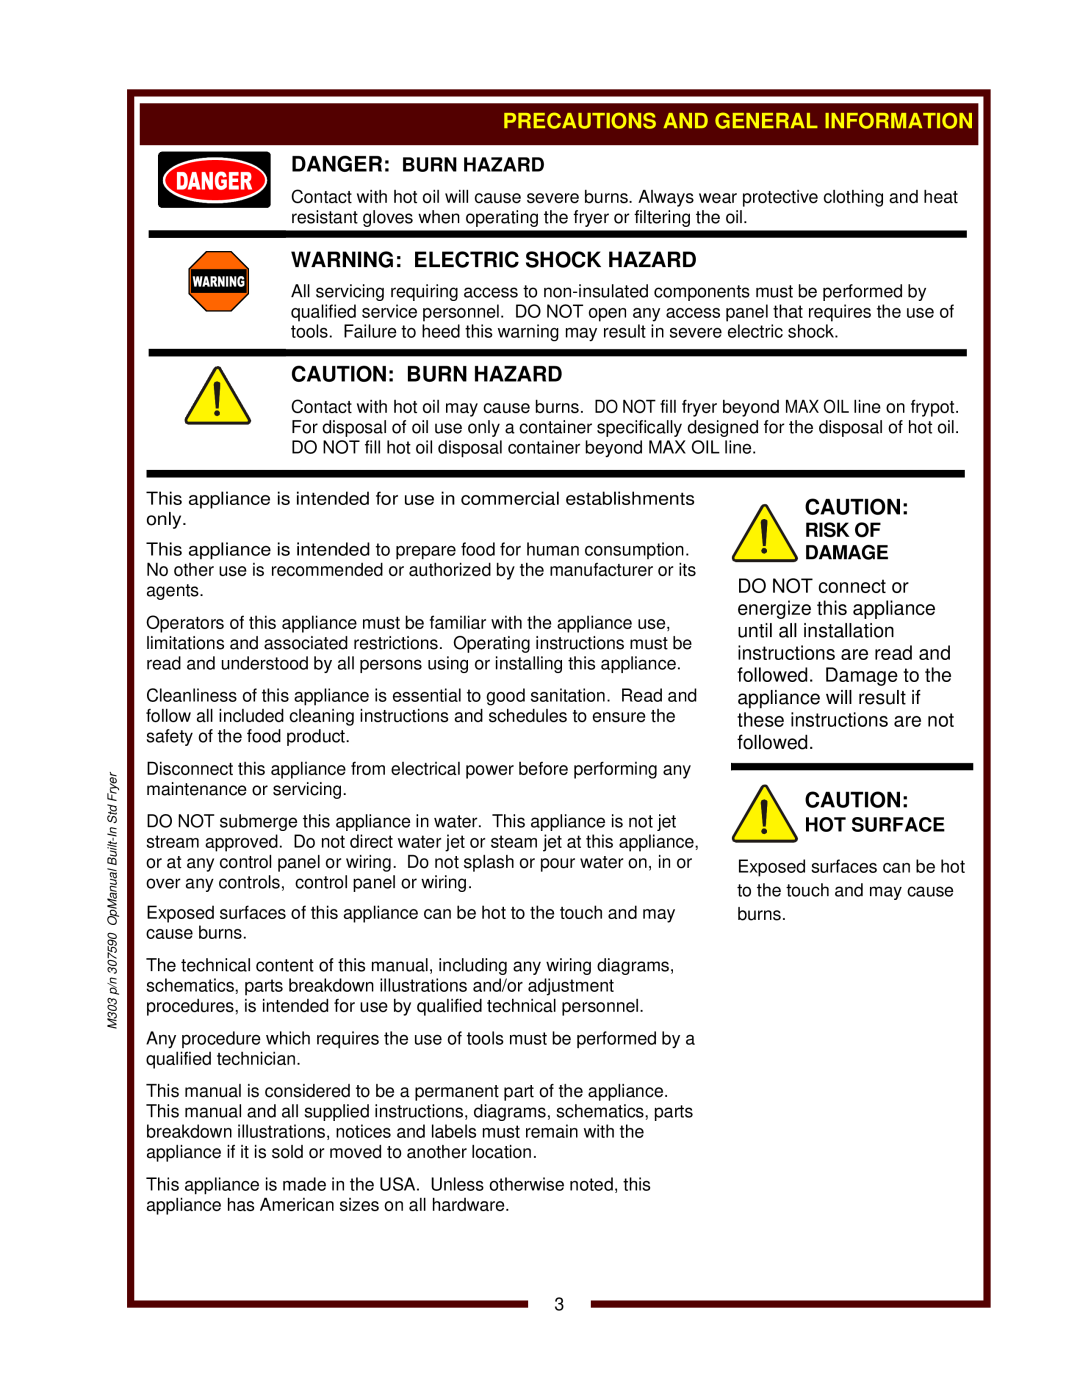 Wells F-856 Precautions And General Information, Warning Electric Shock Hazard, Caution Burn Hazard, Danger Burn Hazard 